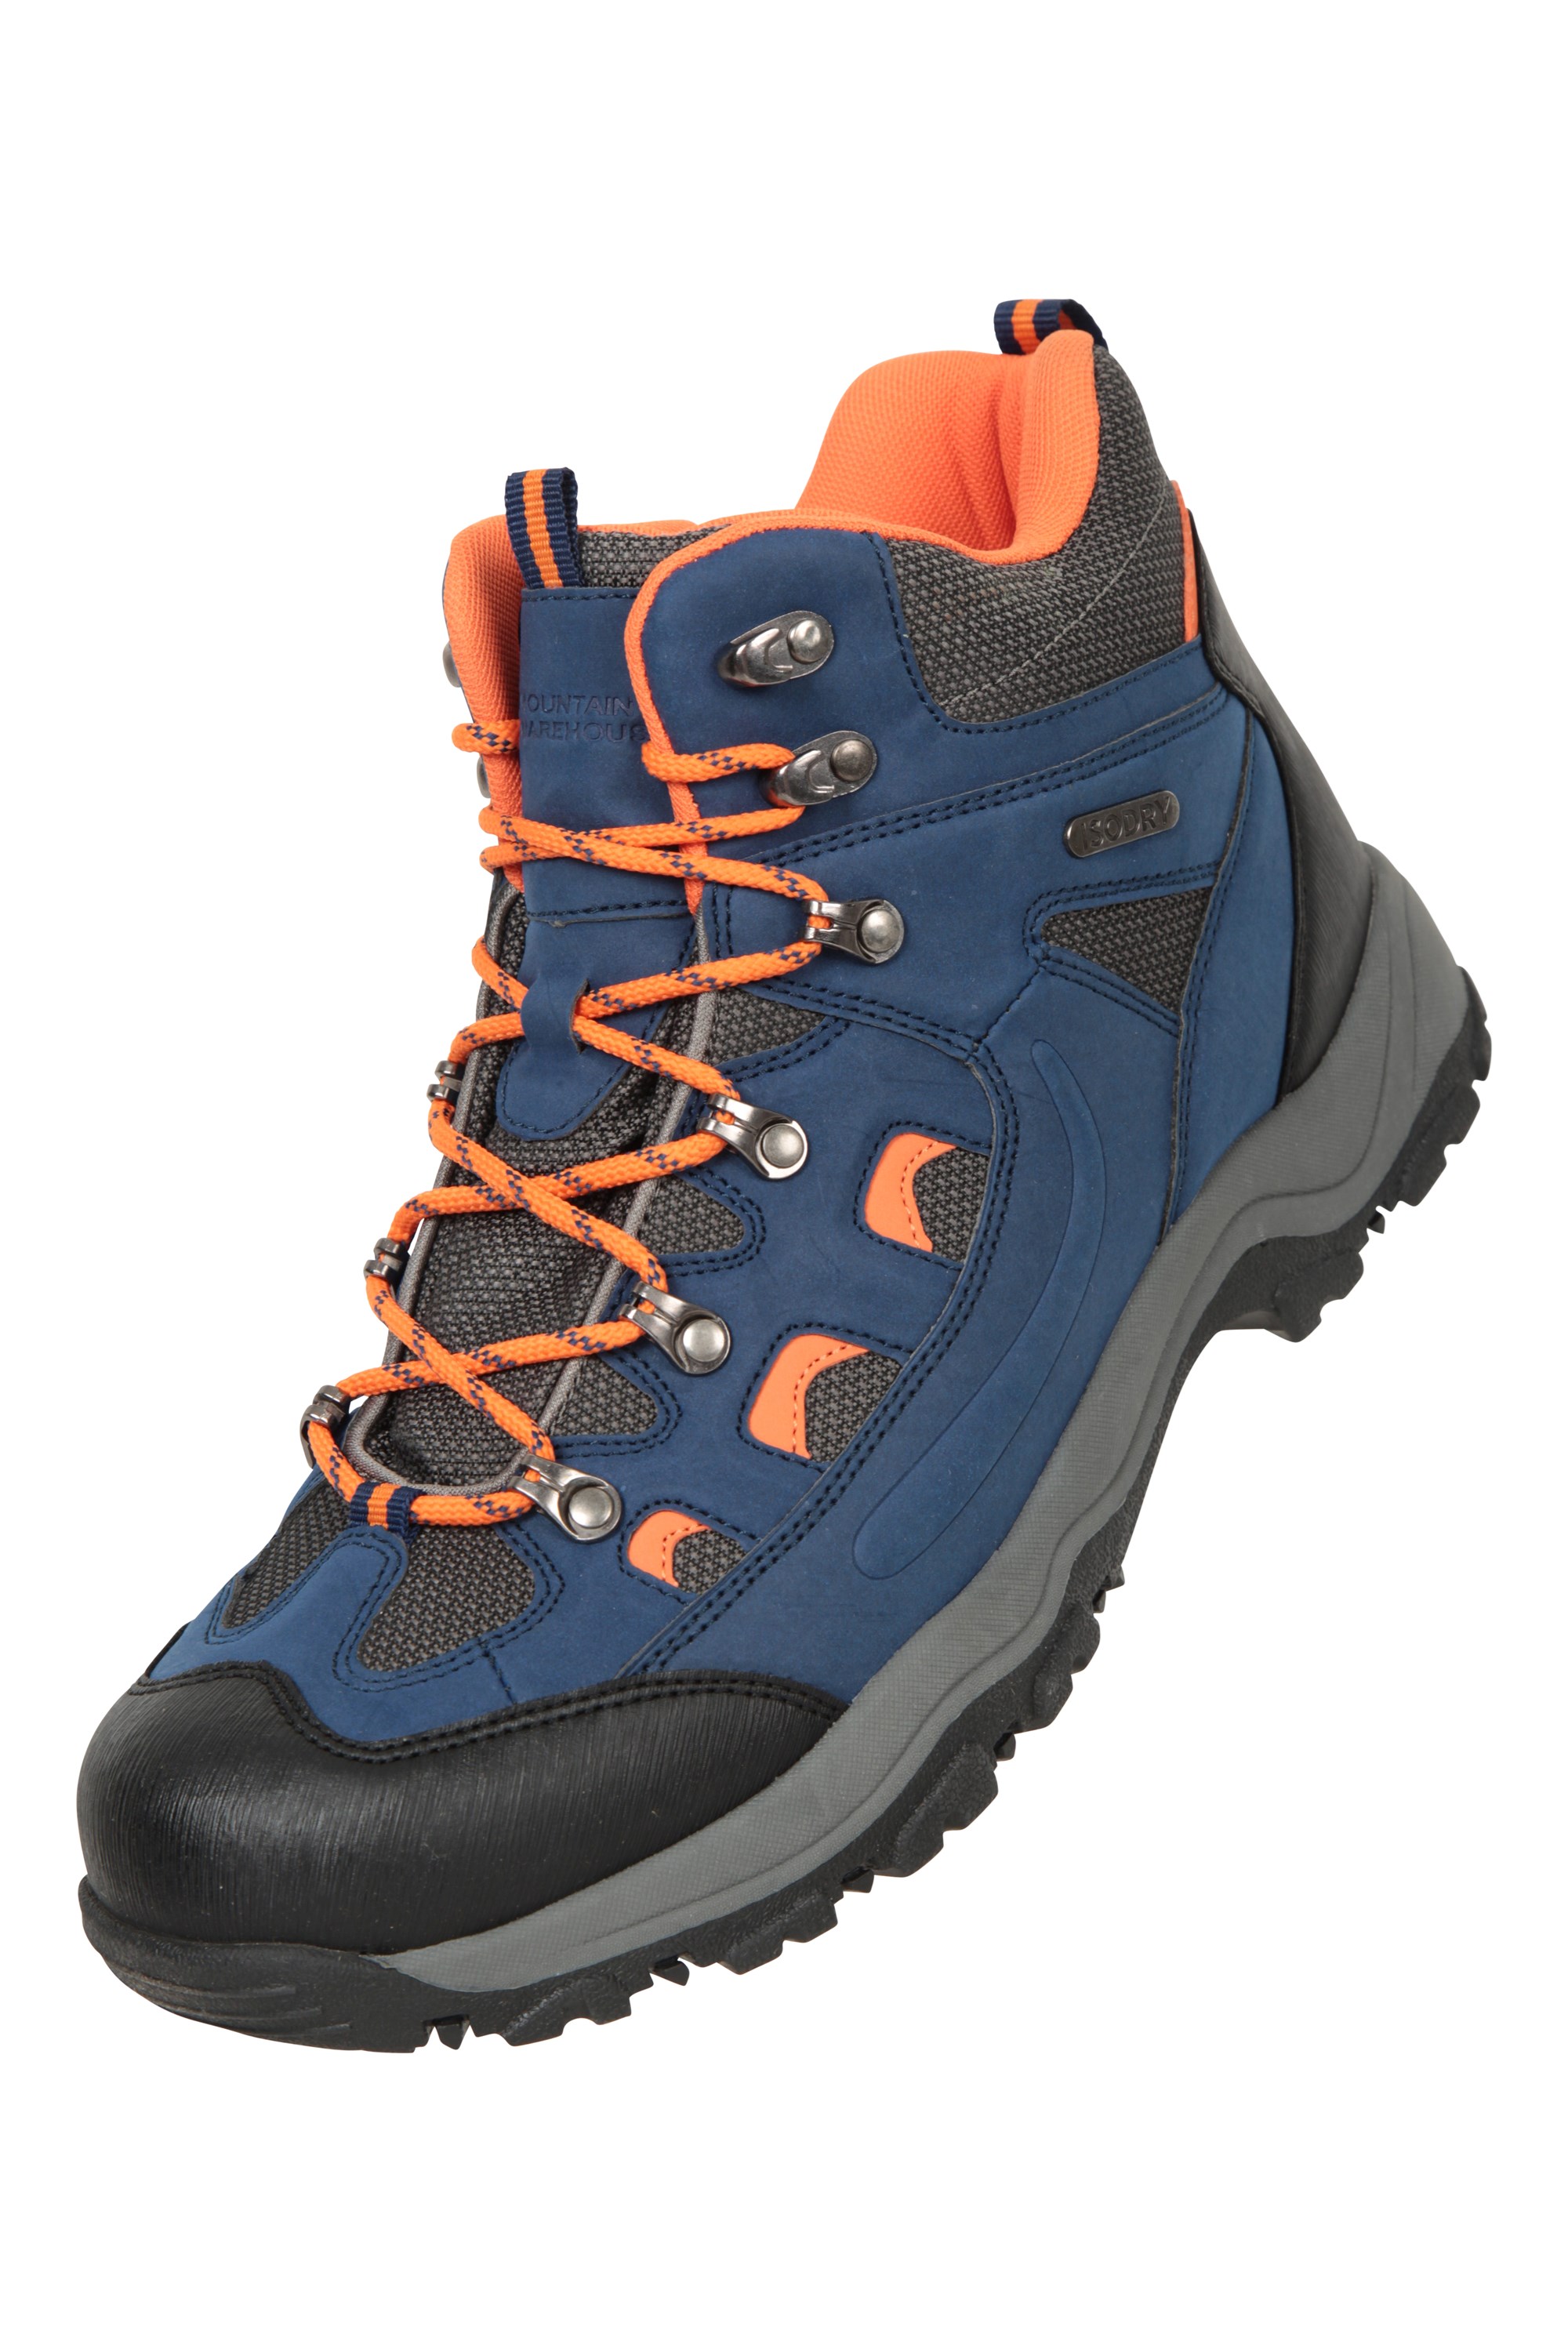 Mountain Warehouse Adventurer Mens Waterproof Hiking Boots Khaki 7 M US Men  : : Clothing, Shoes & Accessories